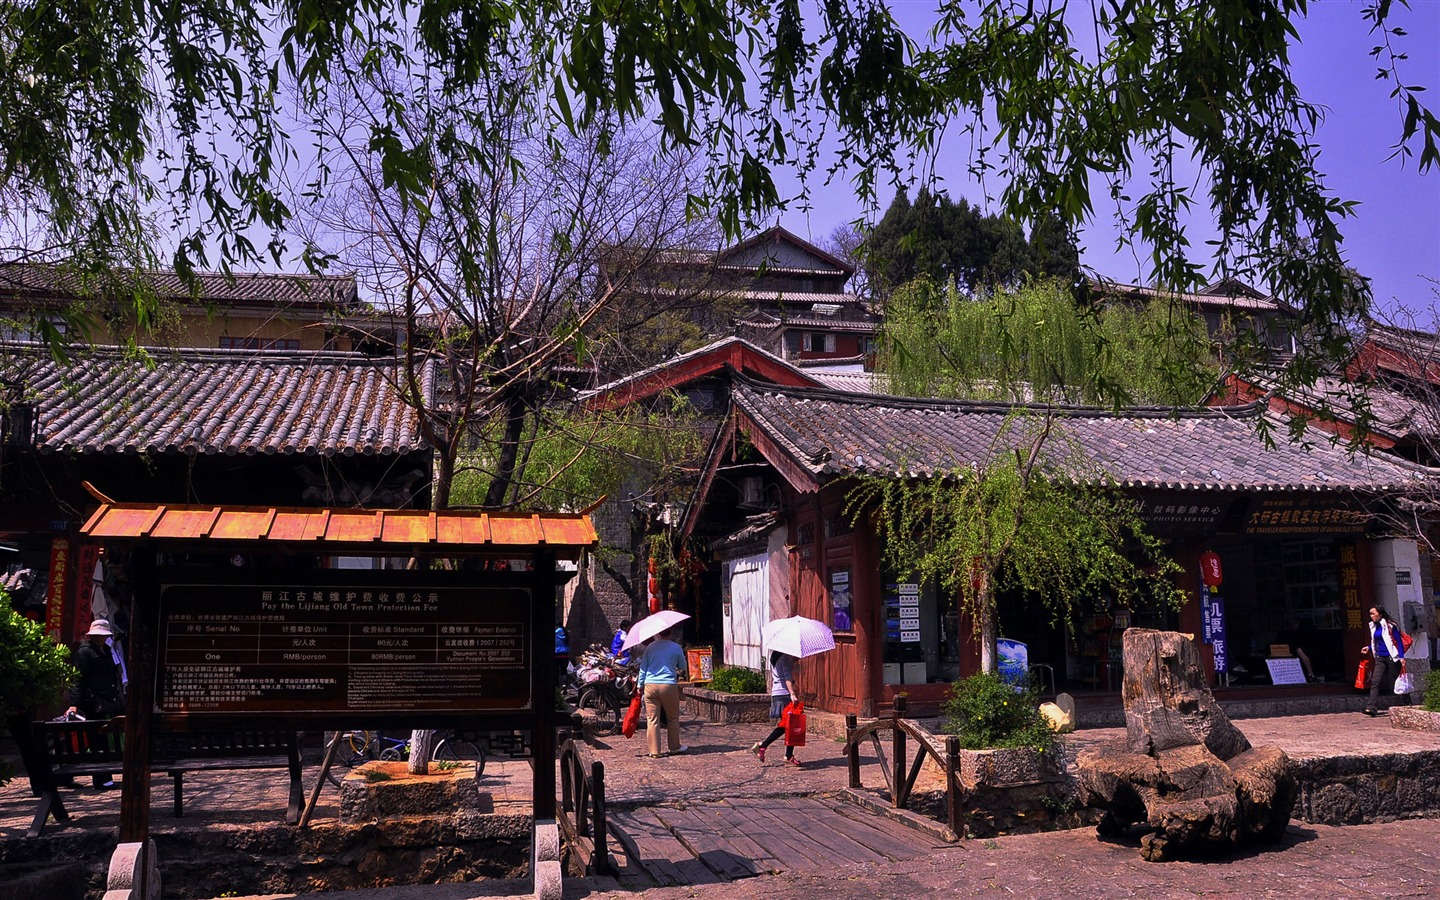 Lijiang ancient town atmosphere (2) (old Hong OK works) #26 - 1440x900